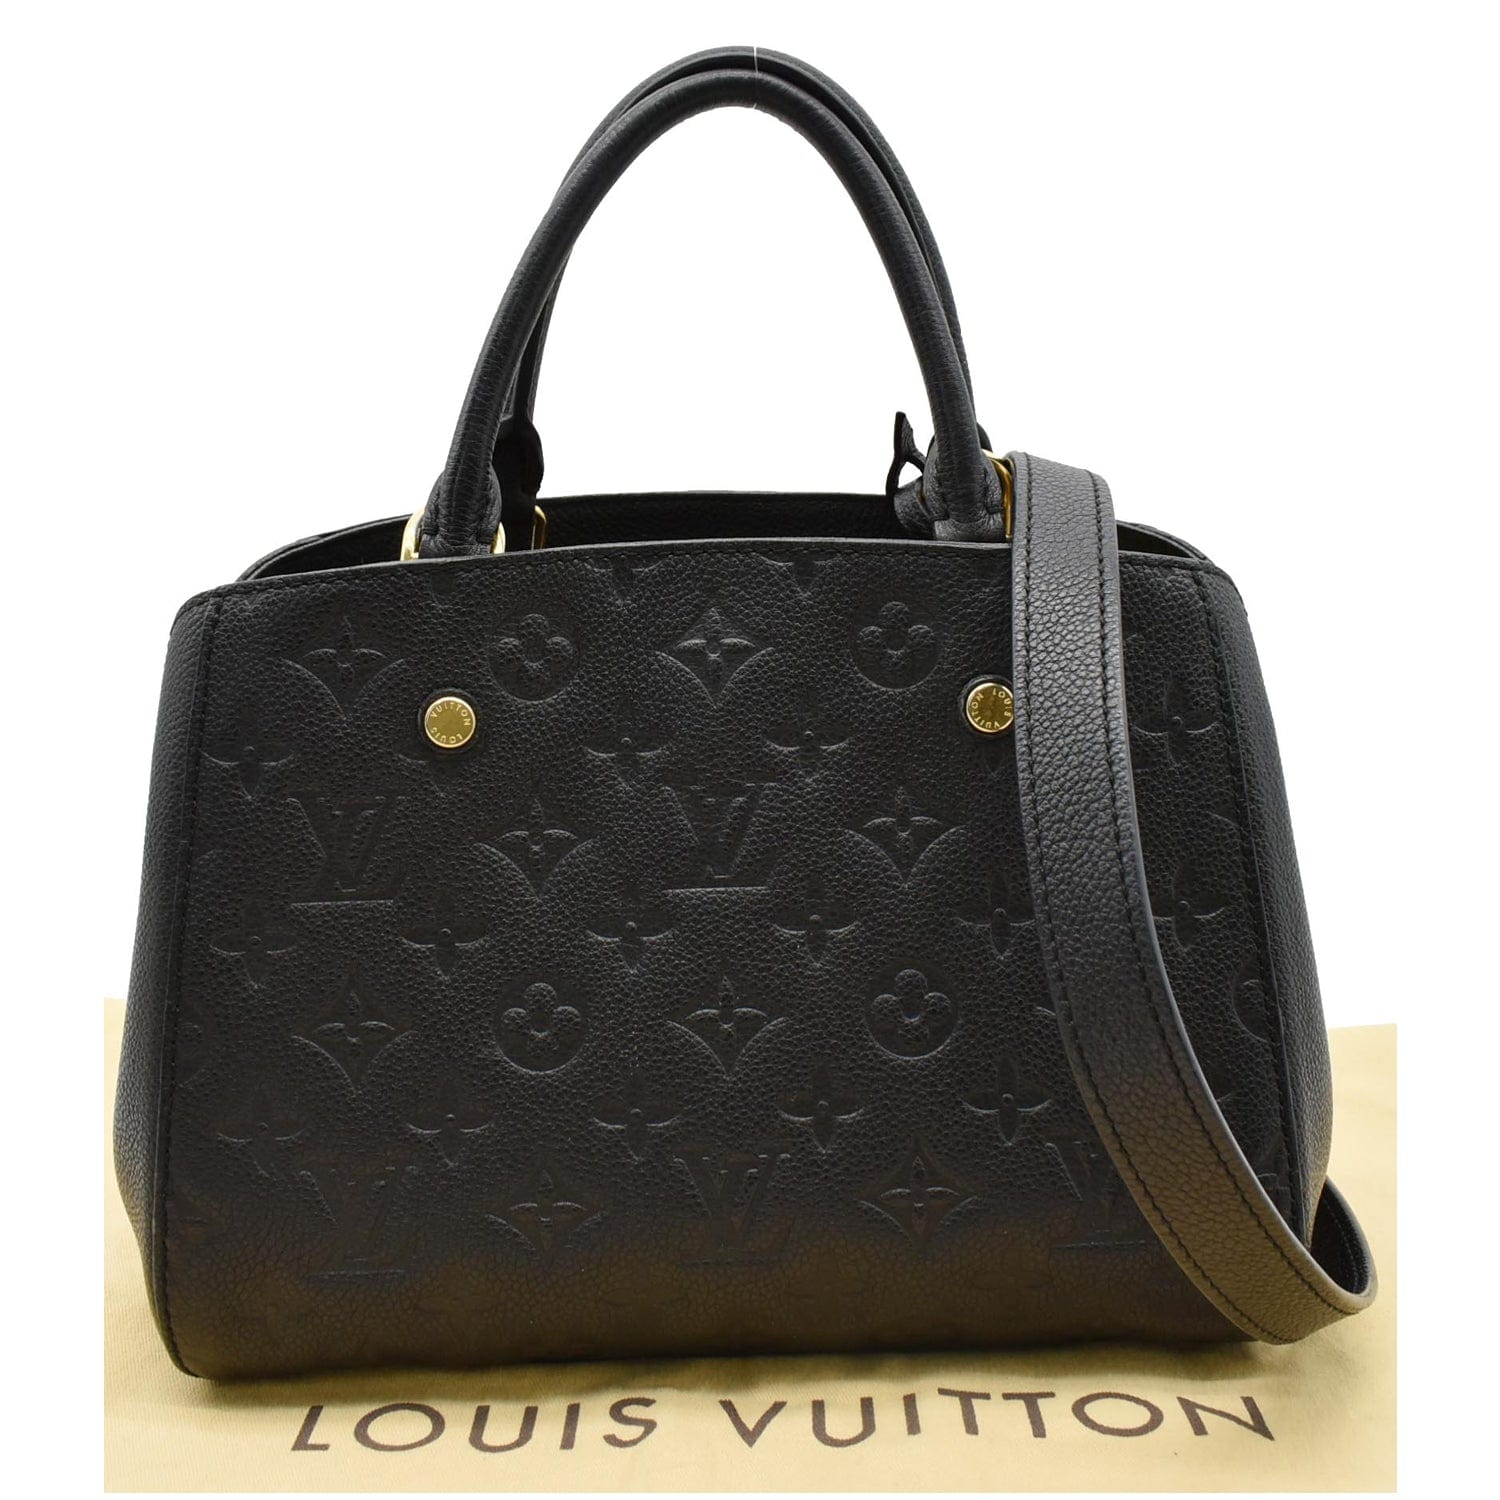 Louis Vuitton Montaigne BB in black empreinte leather now available. Click  to shop.